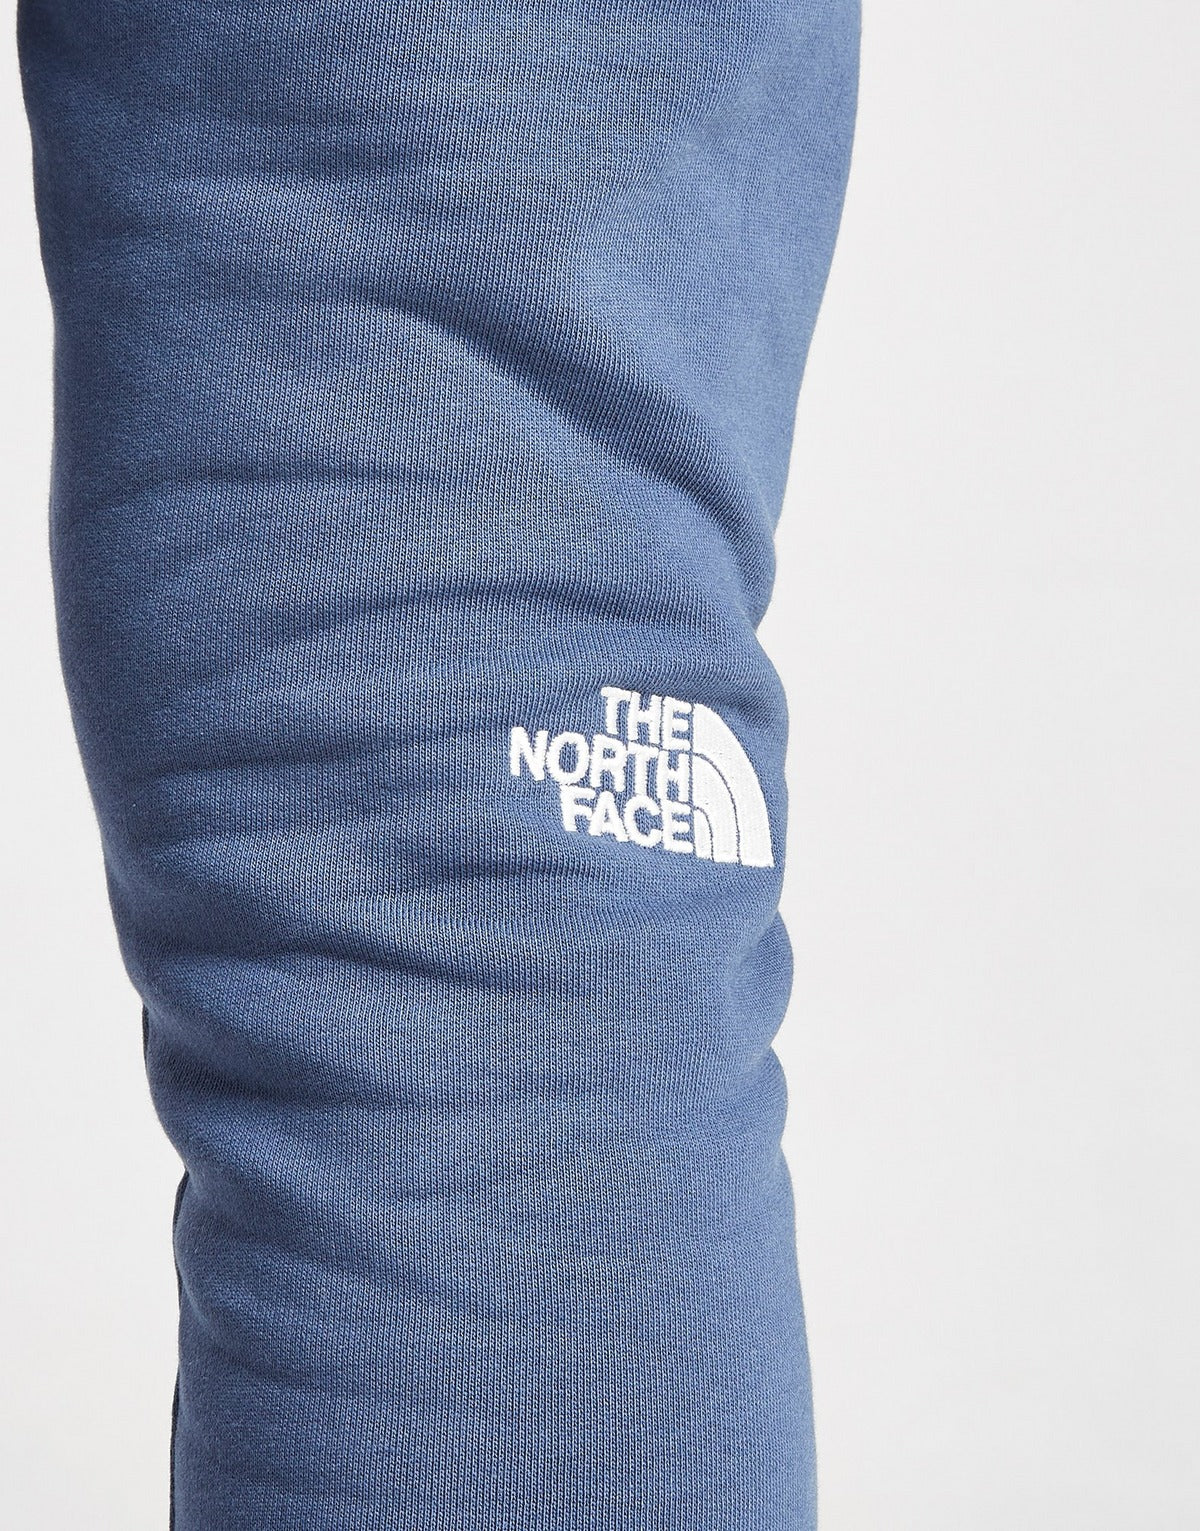 The North Face Youth Fleece Pants Kids Cotton Fleece Joggers